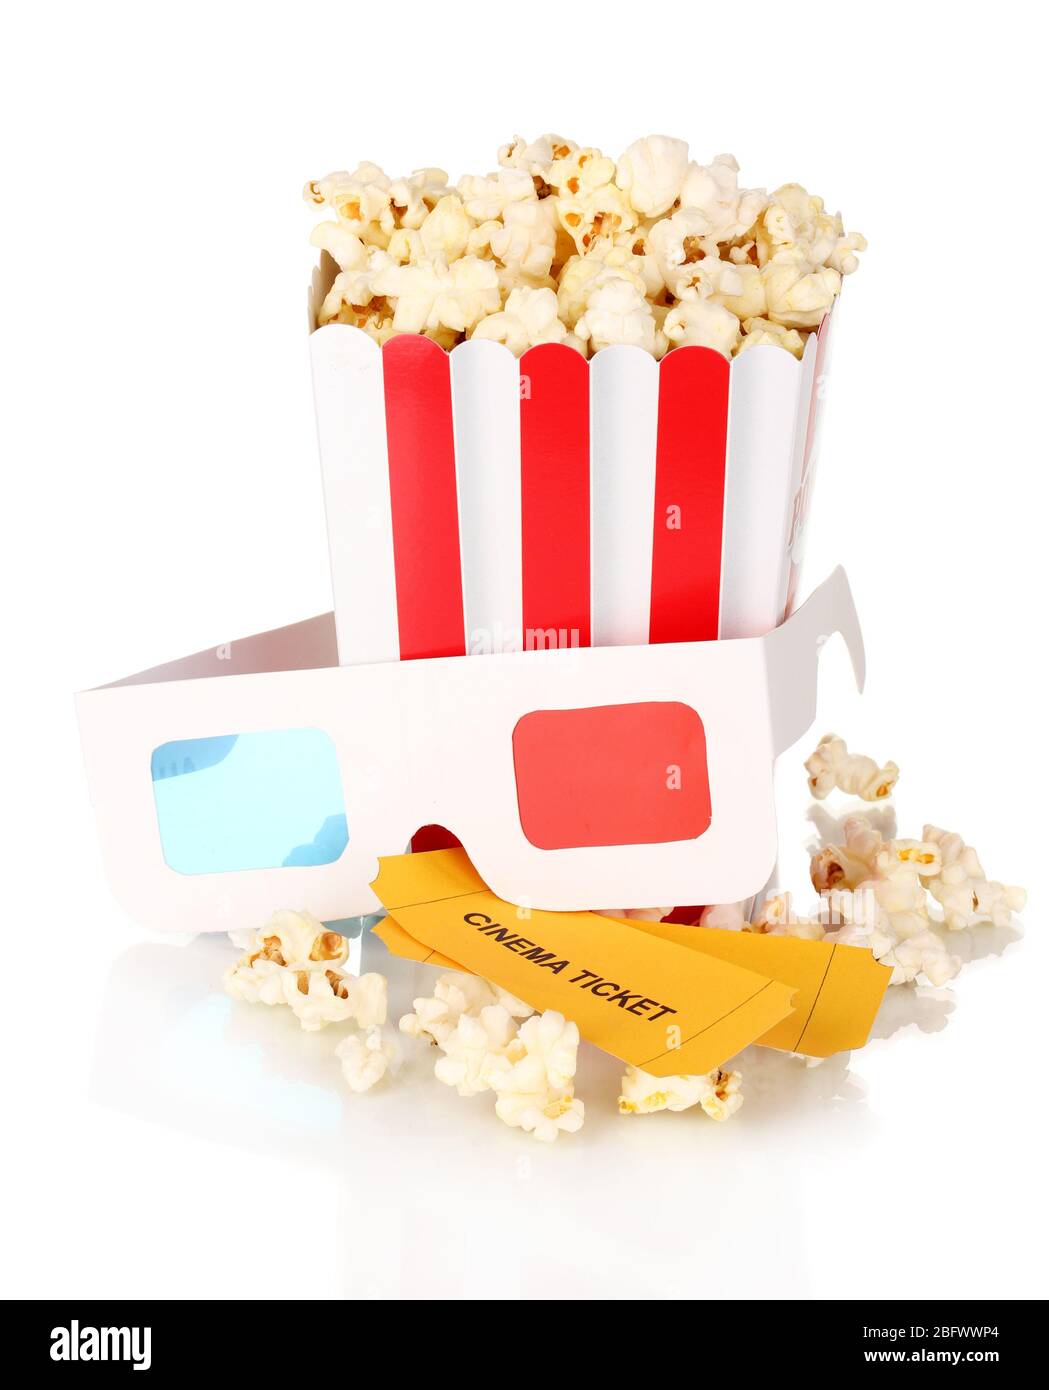 CINEMA Bicchiere popcorn set di 8 bianco, rosso H 16 x W 10 x D 10